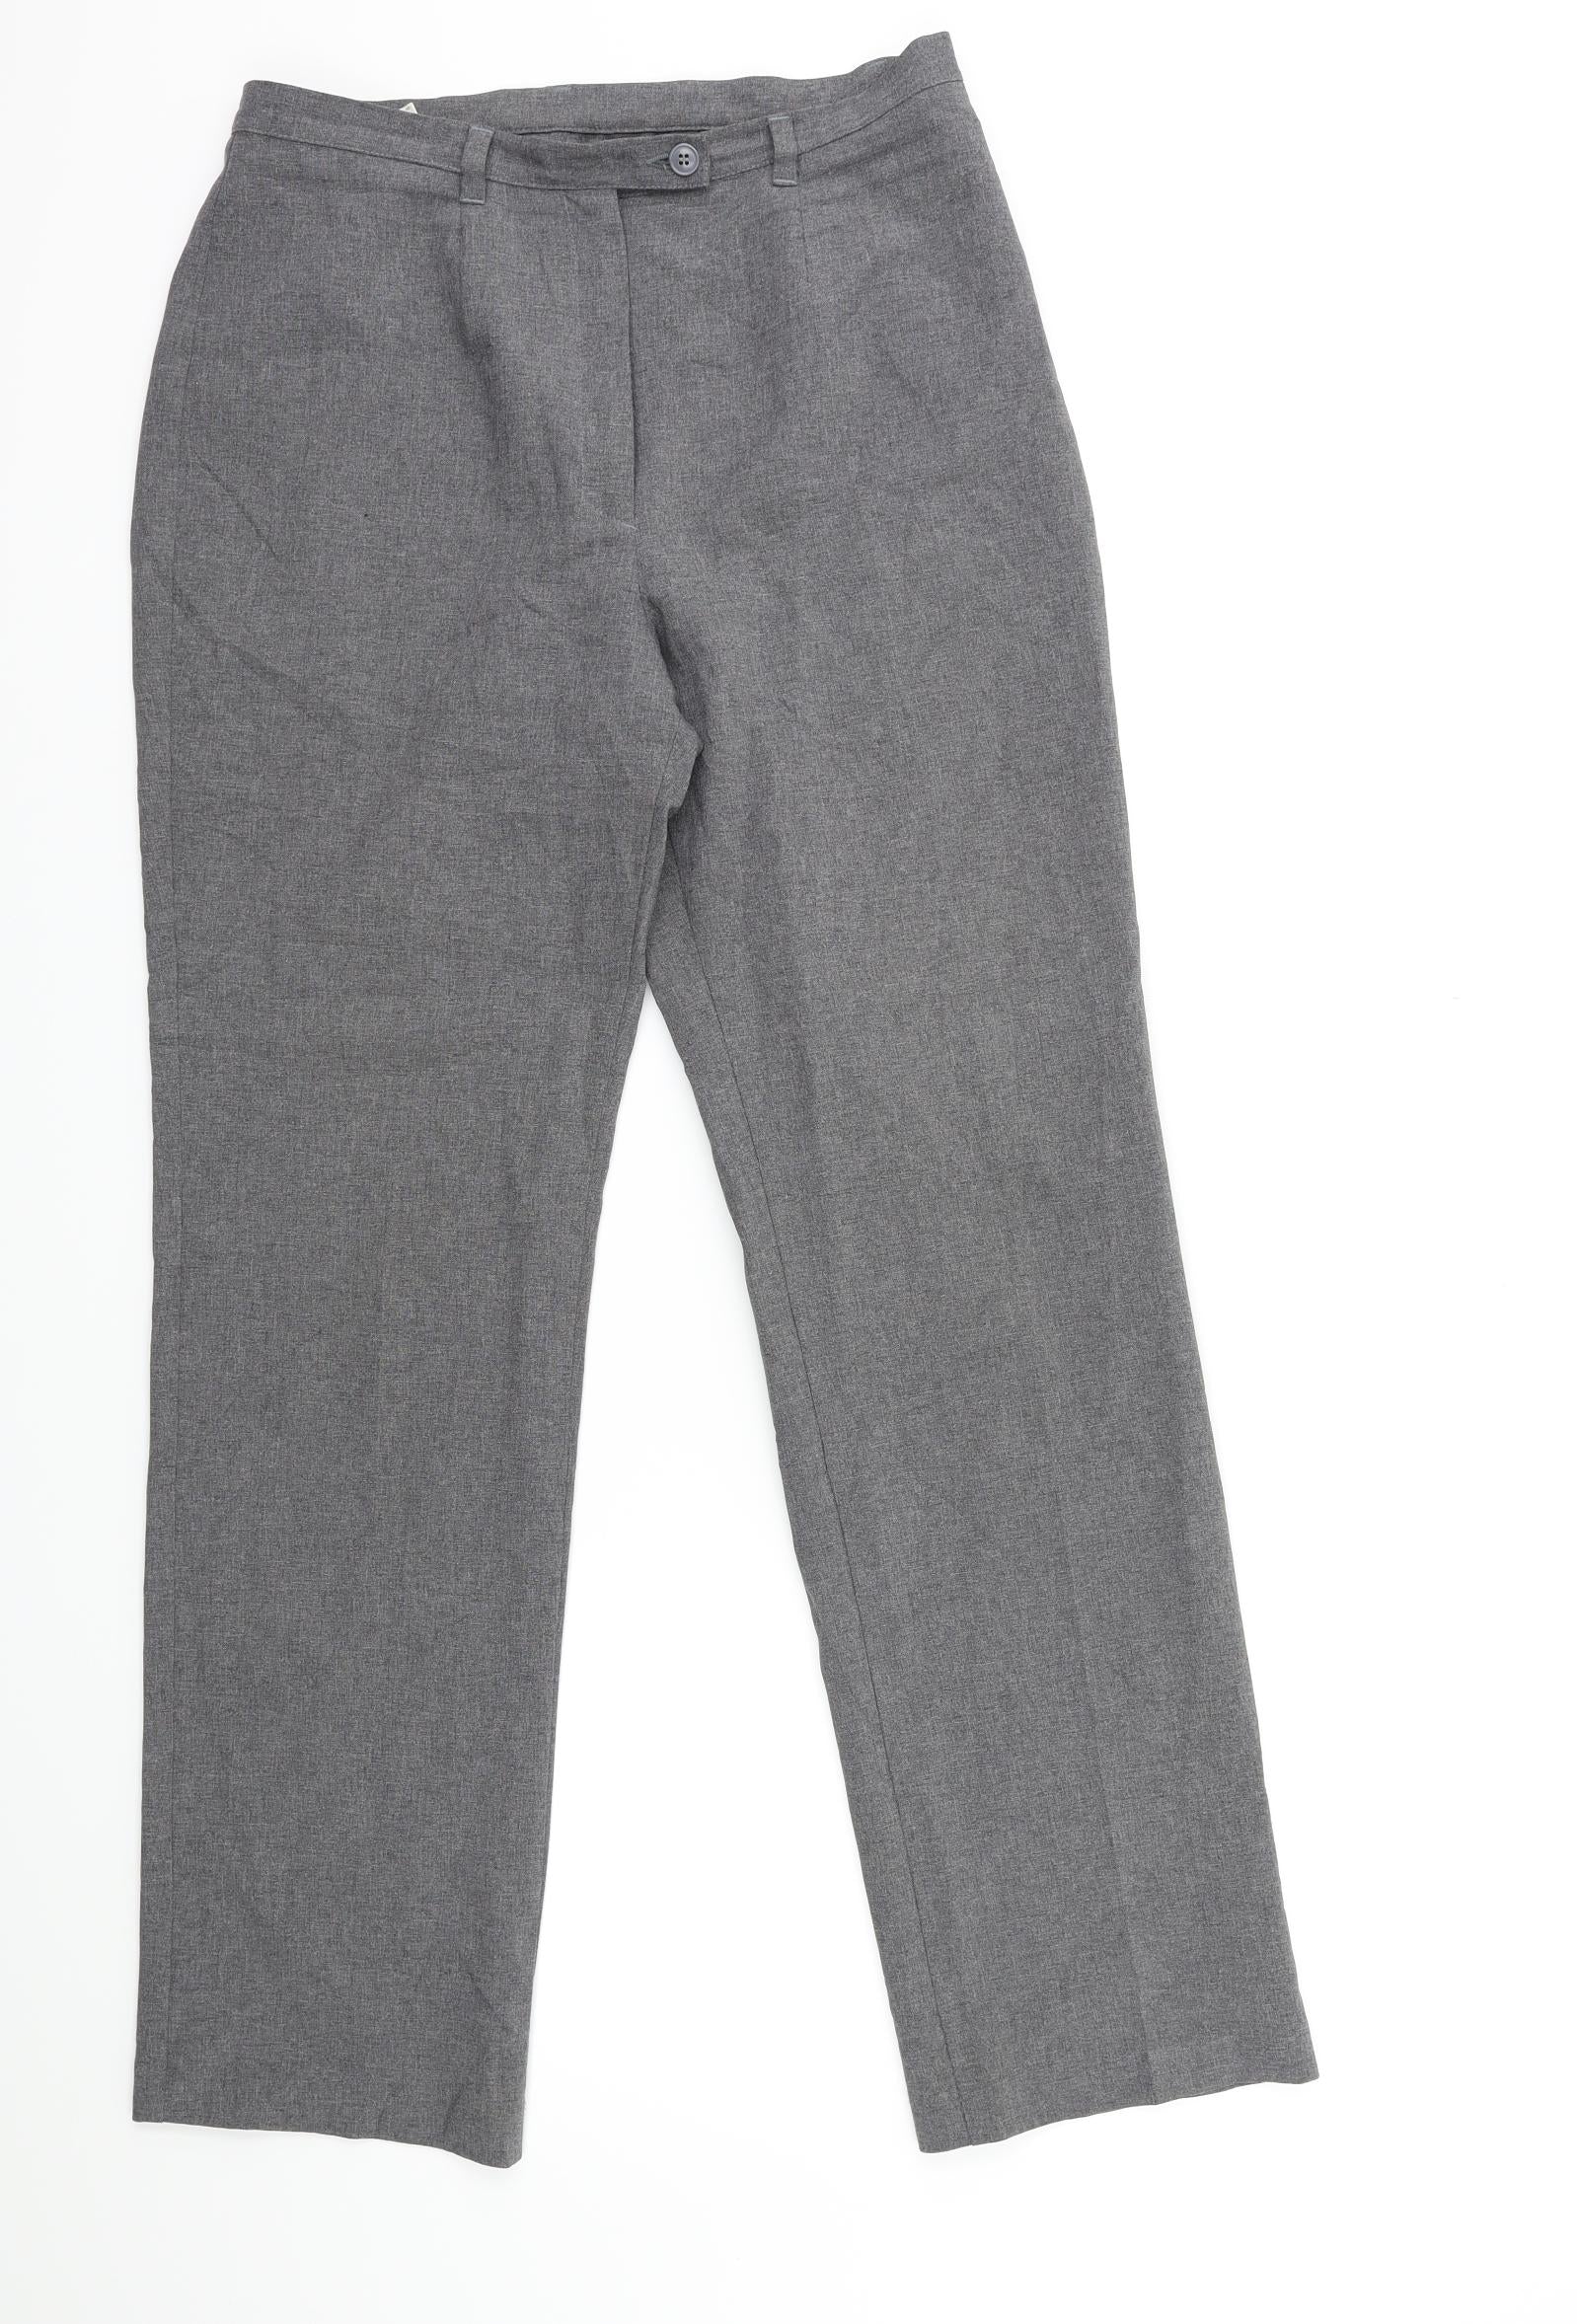 United Colors of Benetton Wool Trousers (Women's Size S) – Loft 68 Vintage